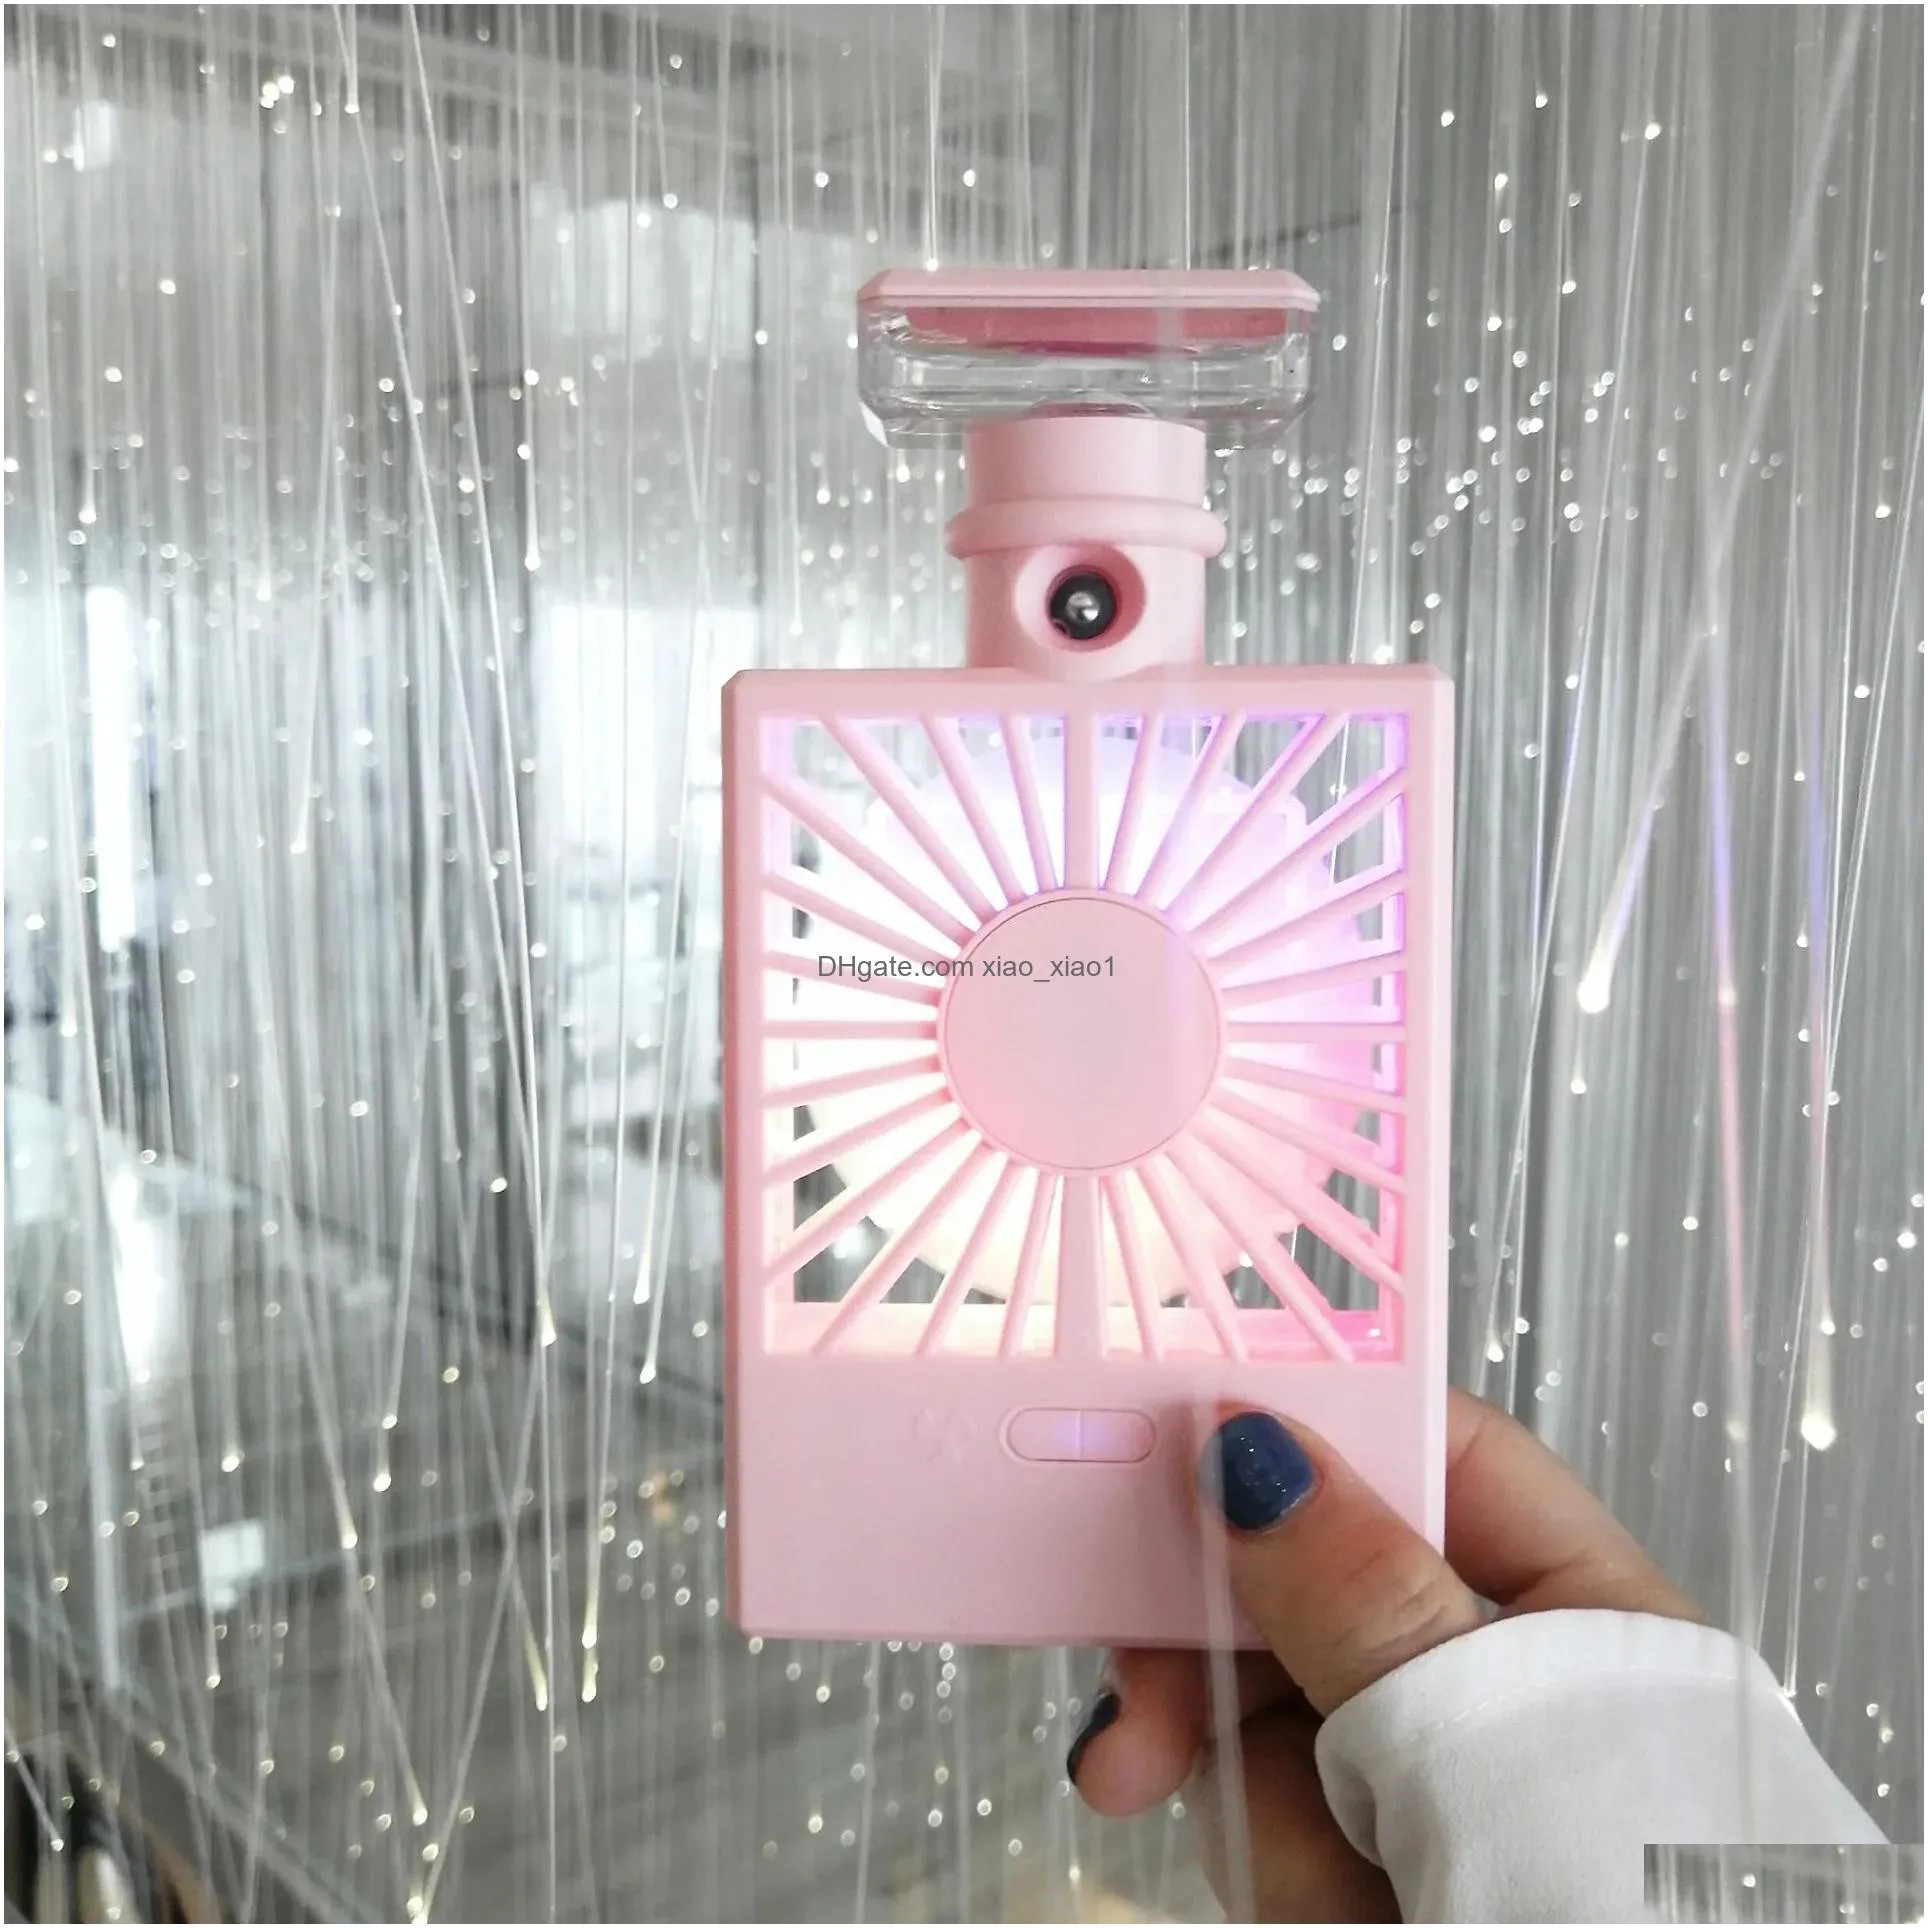 summer high fashion mini fan portable hand mini water spray air conditioner cool air cooler usb charging perfume shaped zz